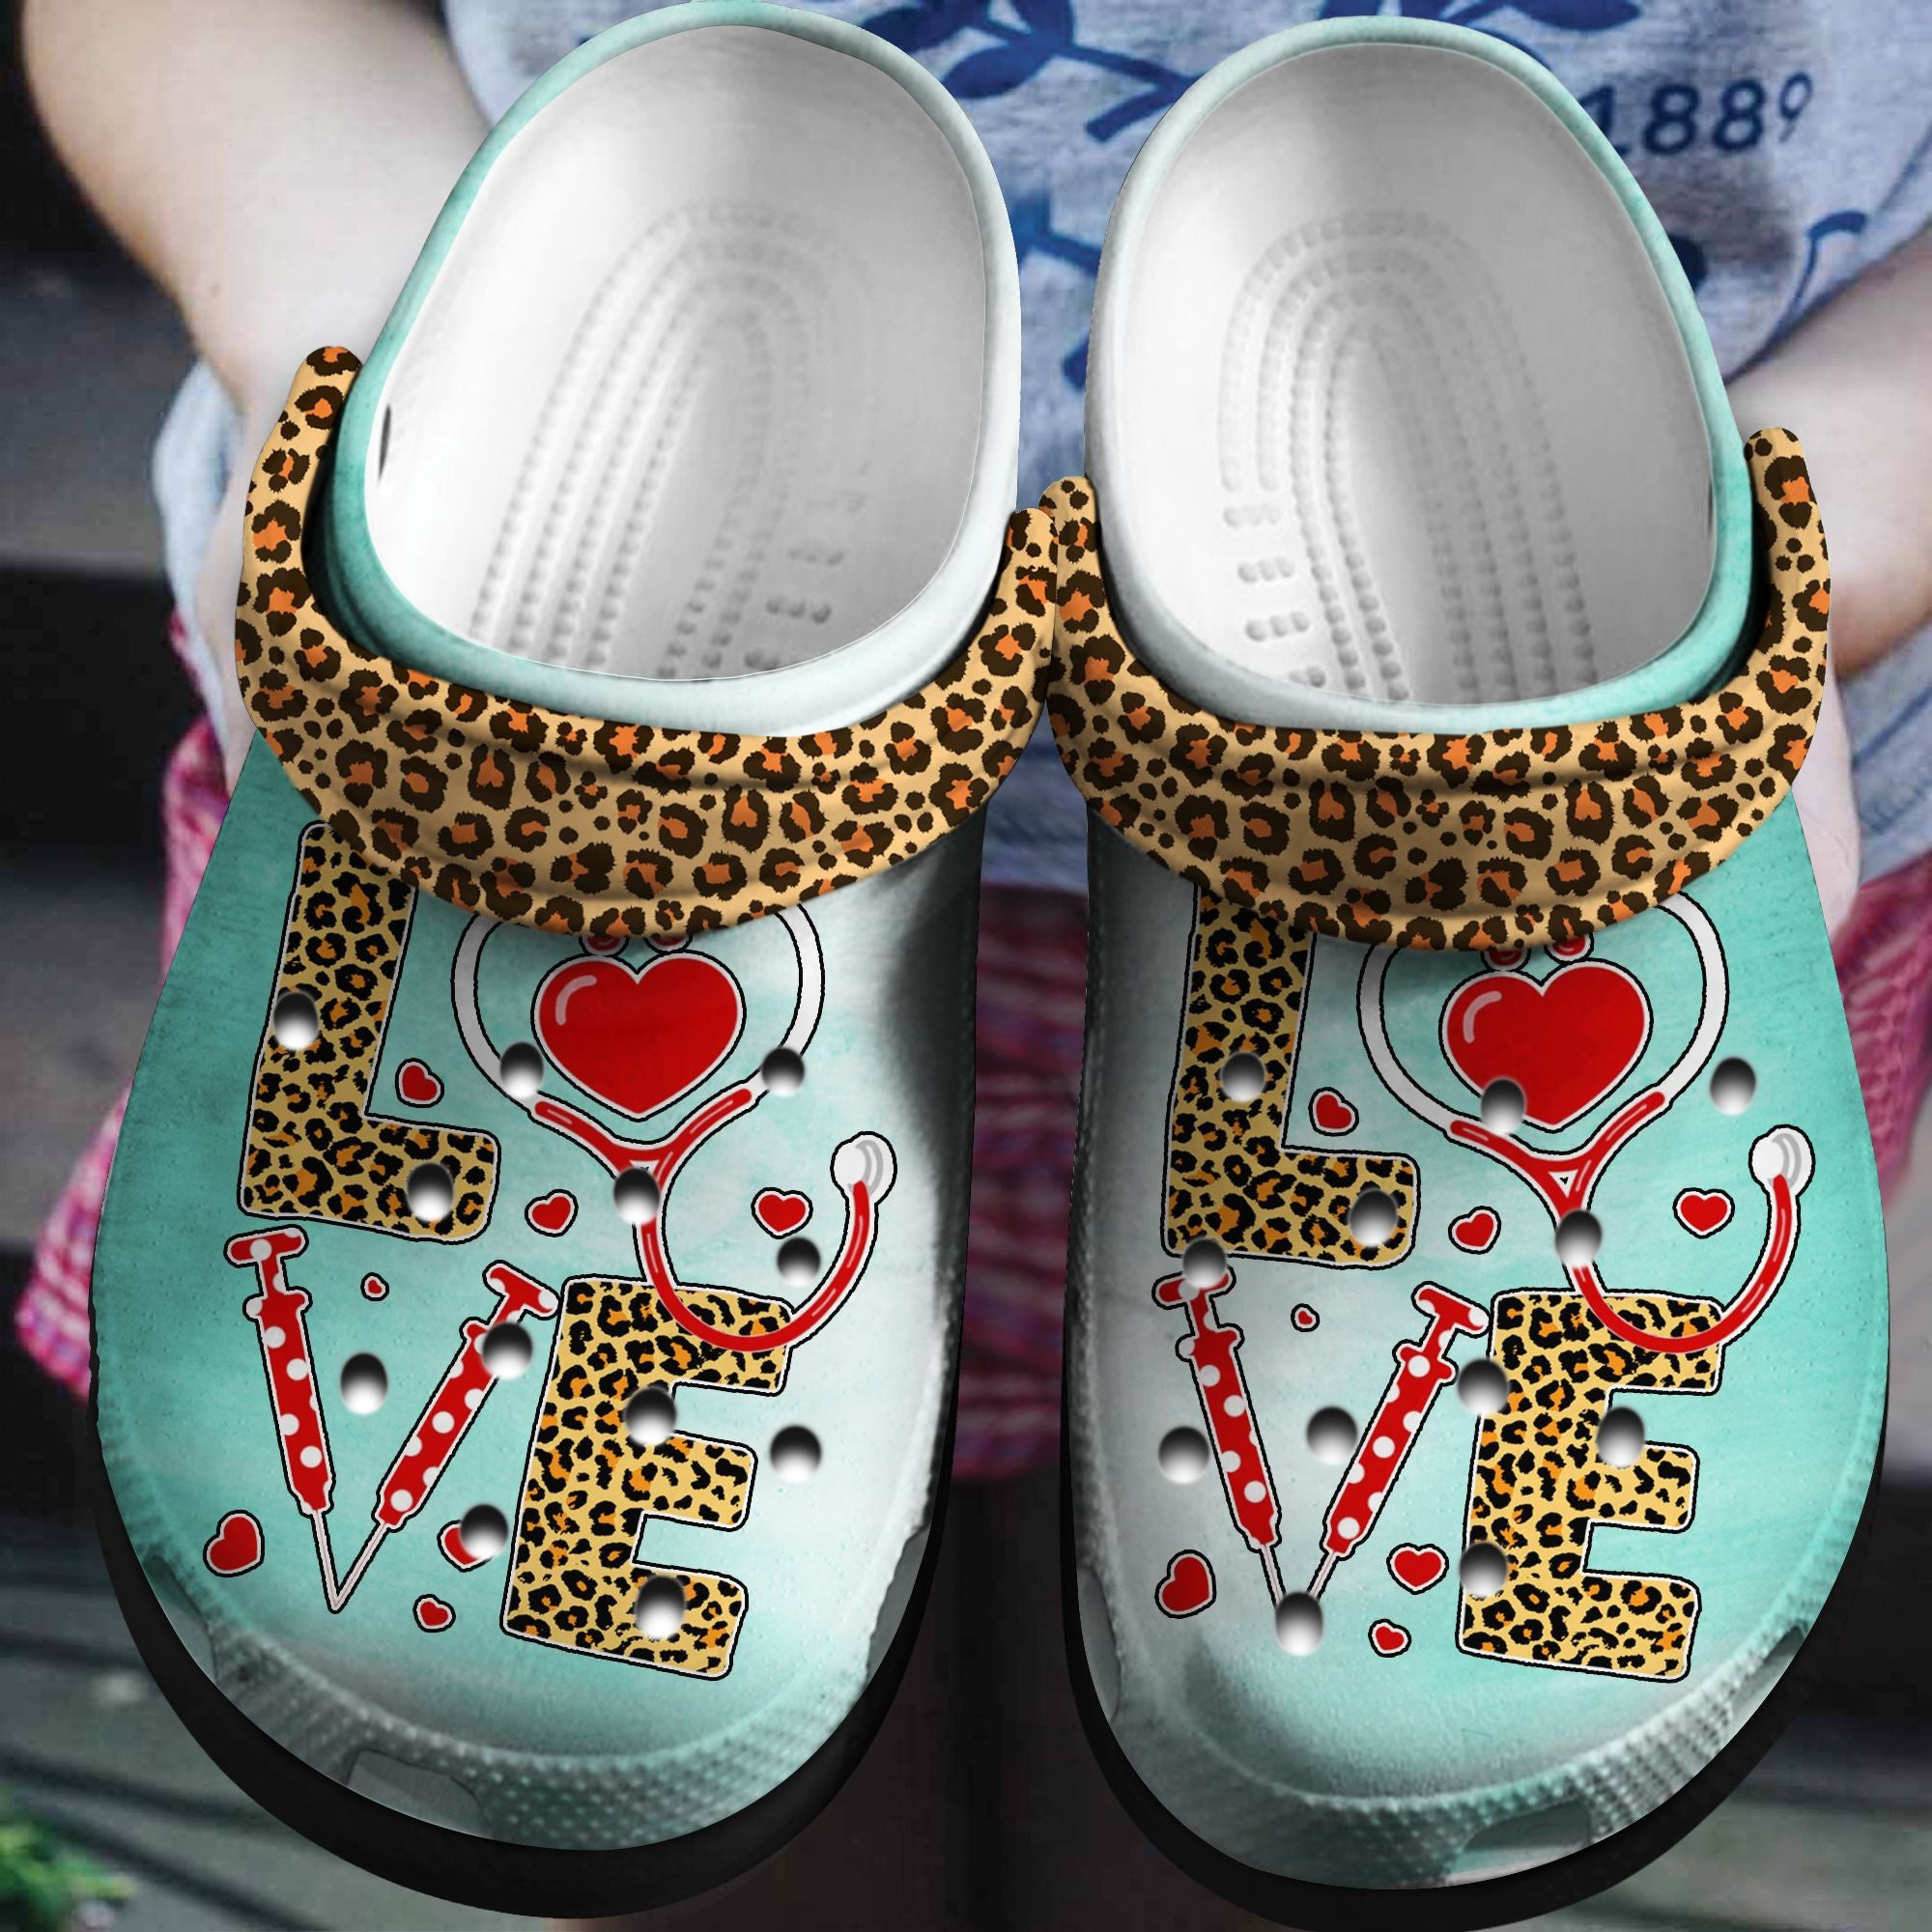 Leopard Skin Nurse Crocs Clog Shoes - Love Nurse Life Outdoor Crocs Clog Shoes Birthday Gift For Men Women Boy Girl